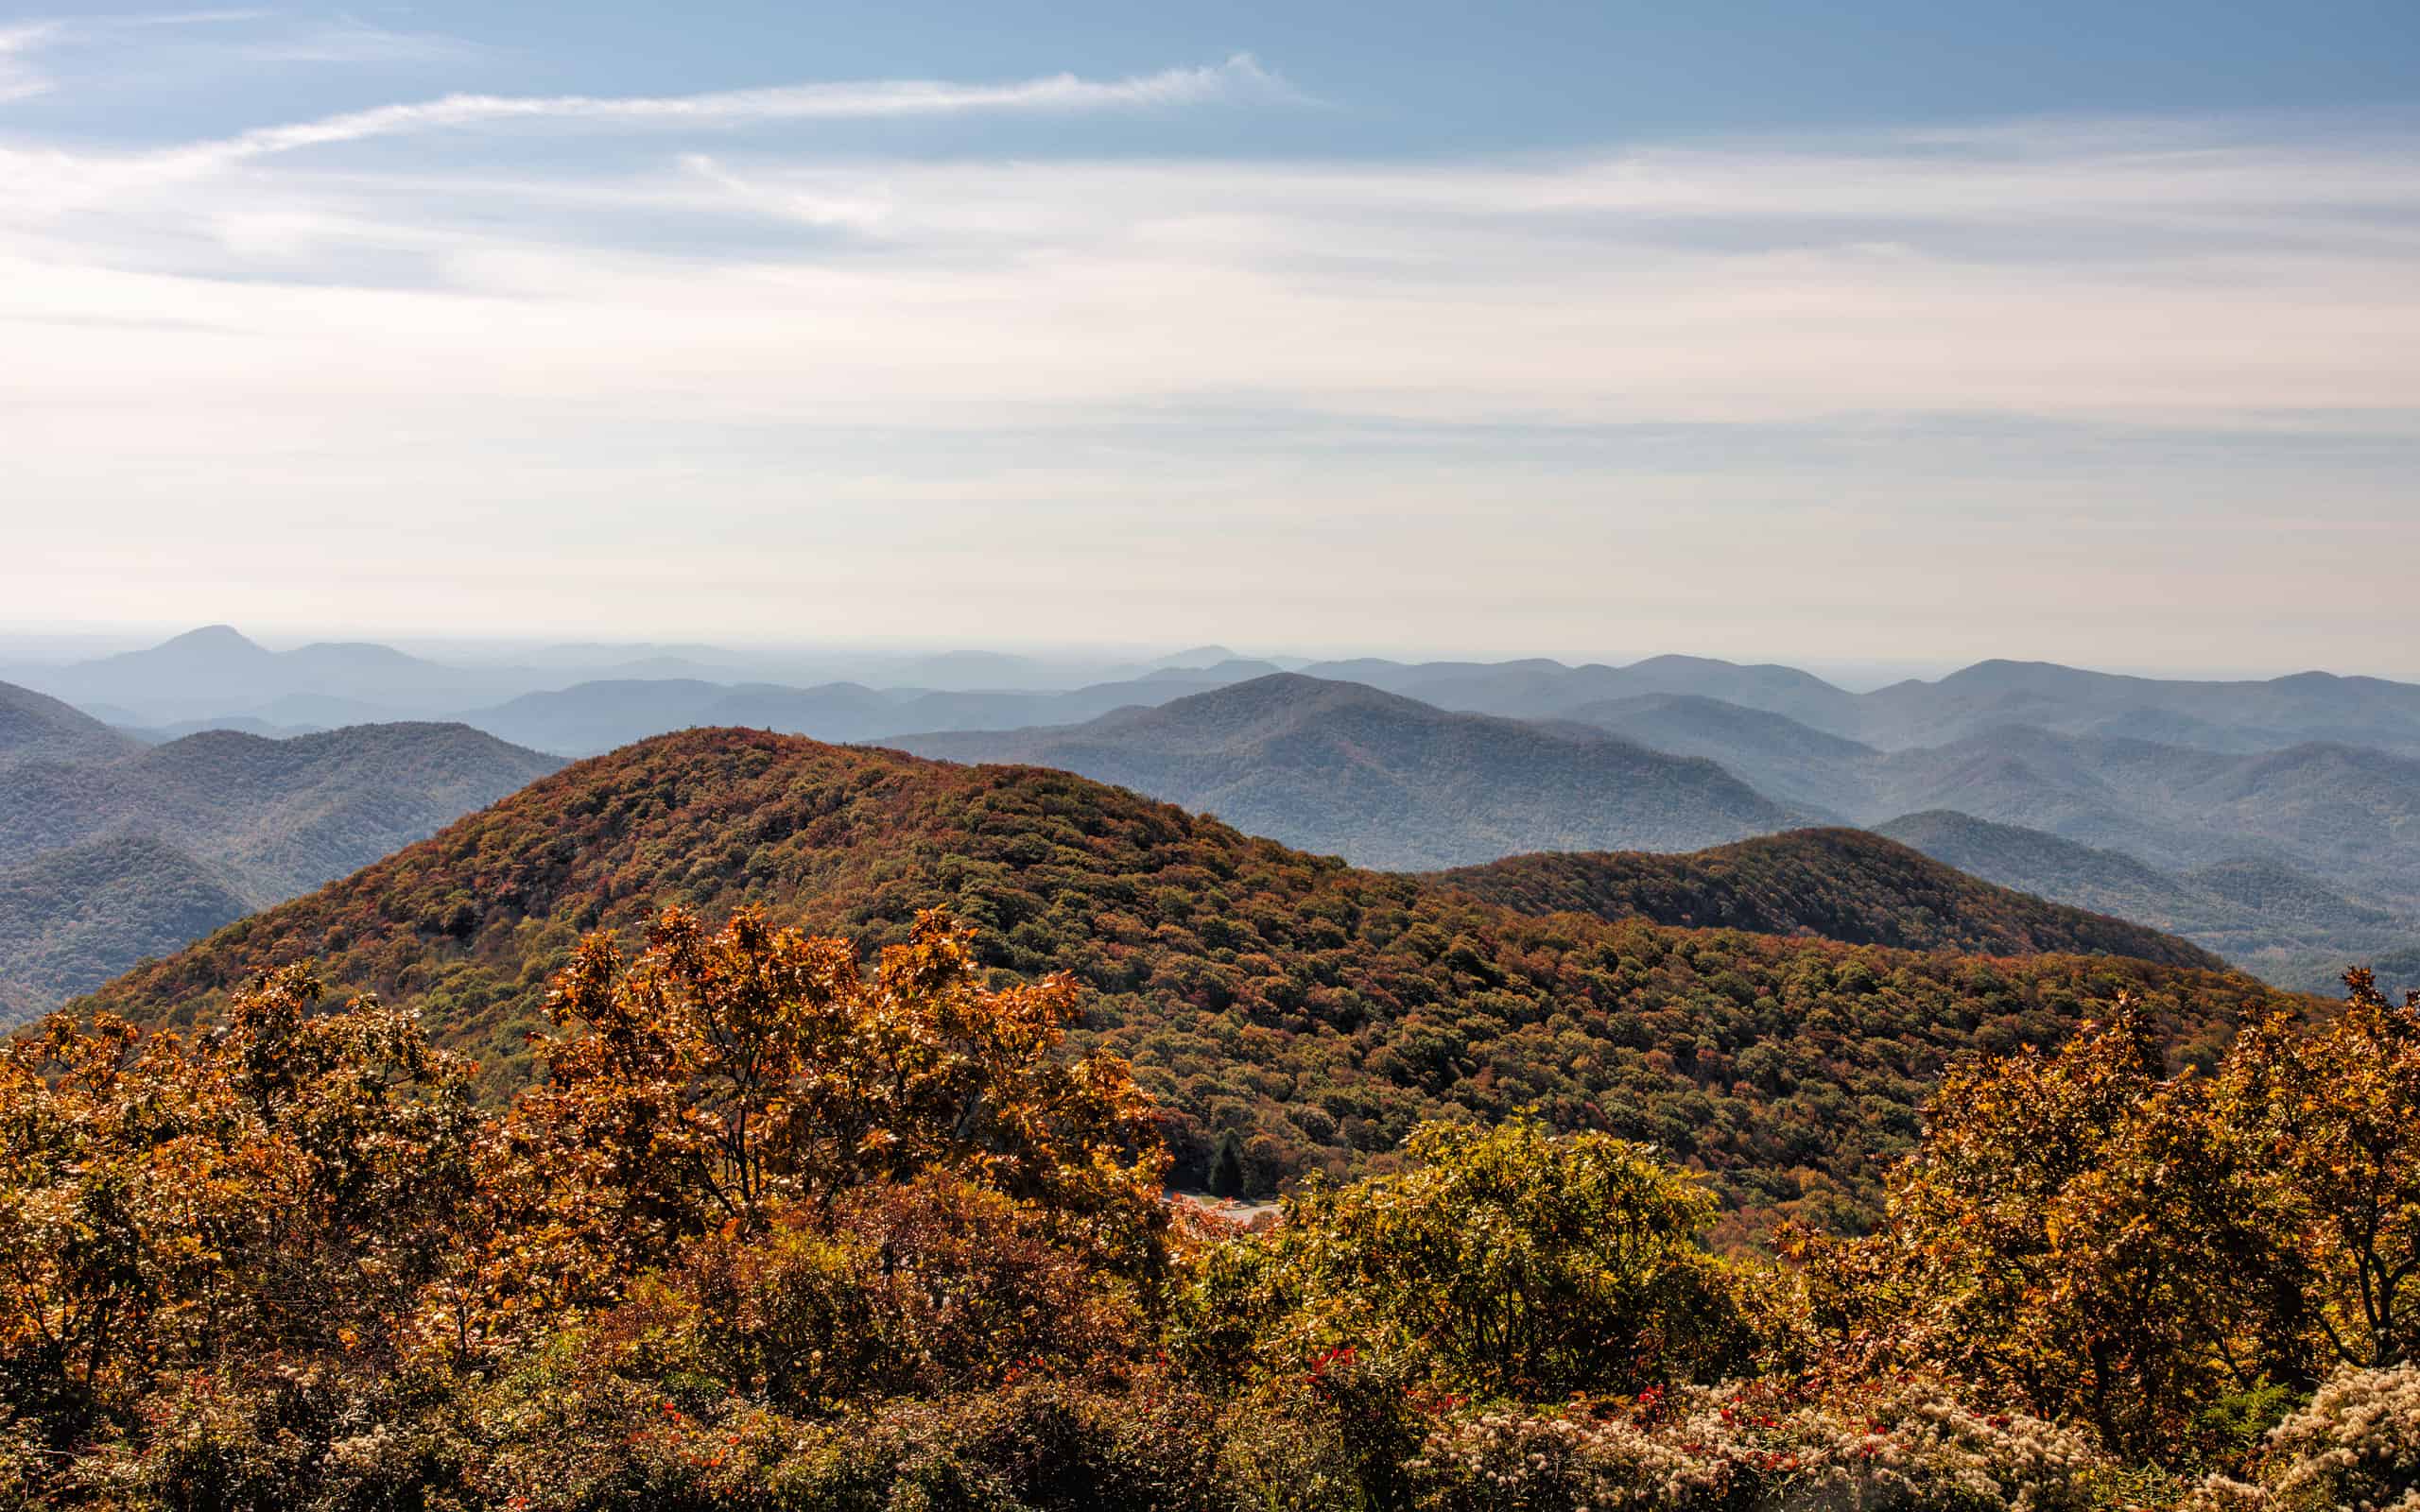 Autumn Landscape View from Brasstown Bald Mountain in Georgia